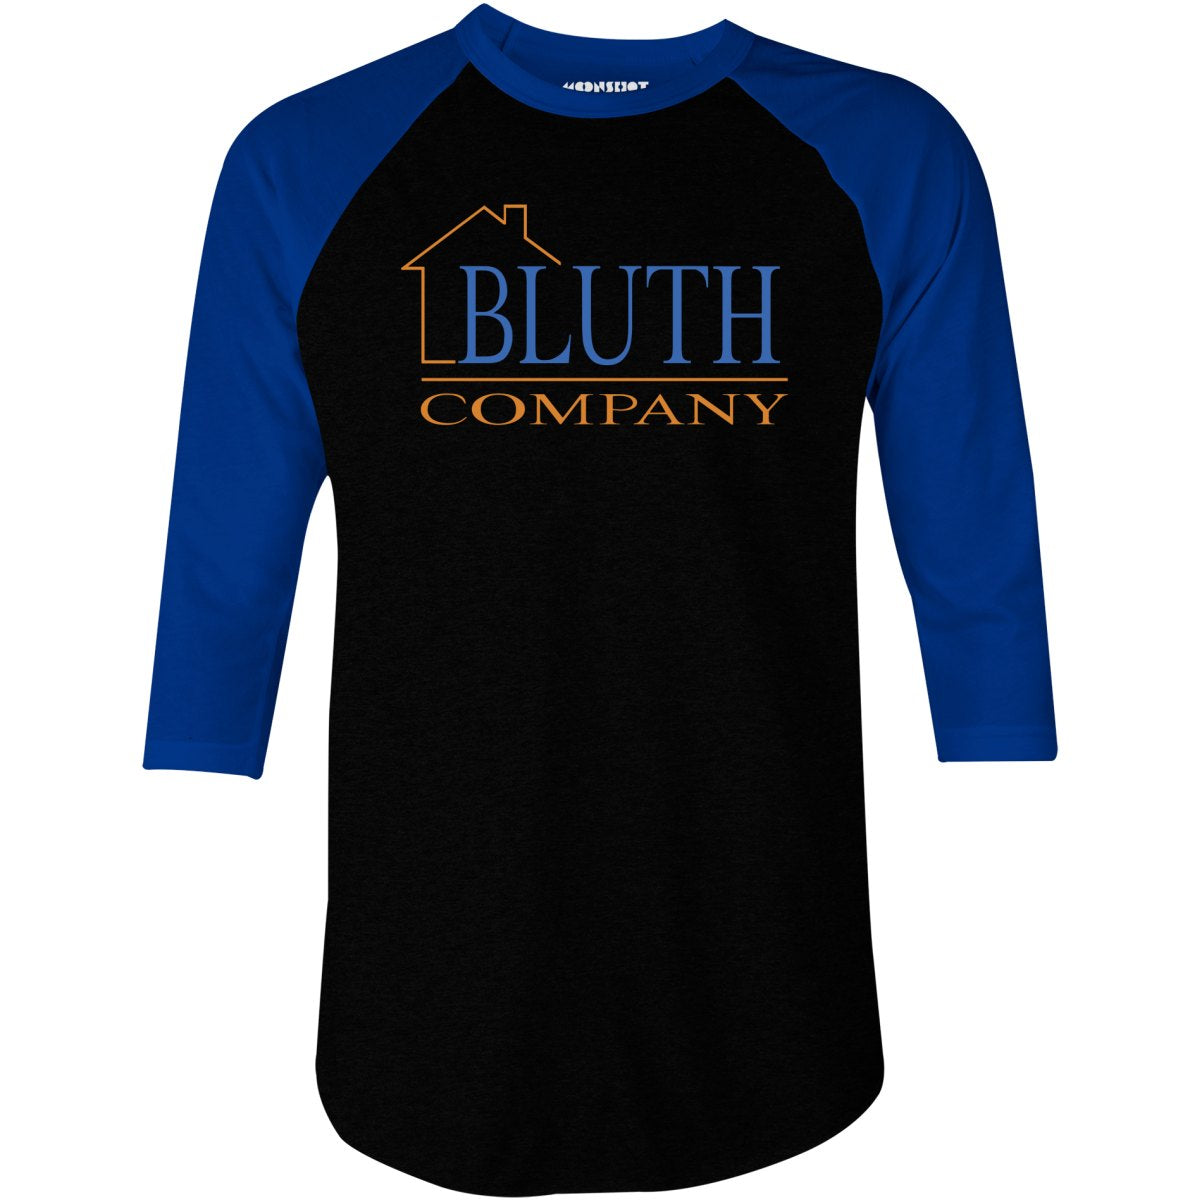 Bluth Company - 3/4 Sleeve Raglan T-Shirt